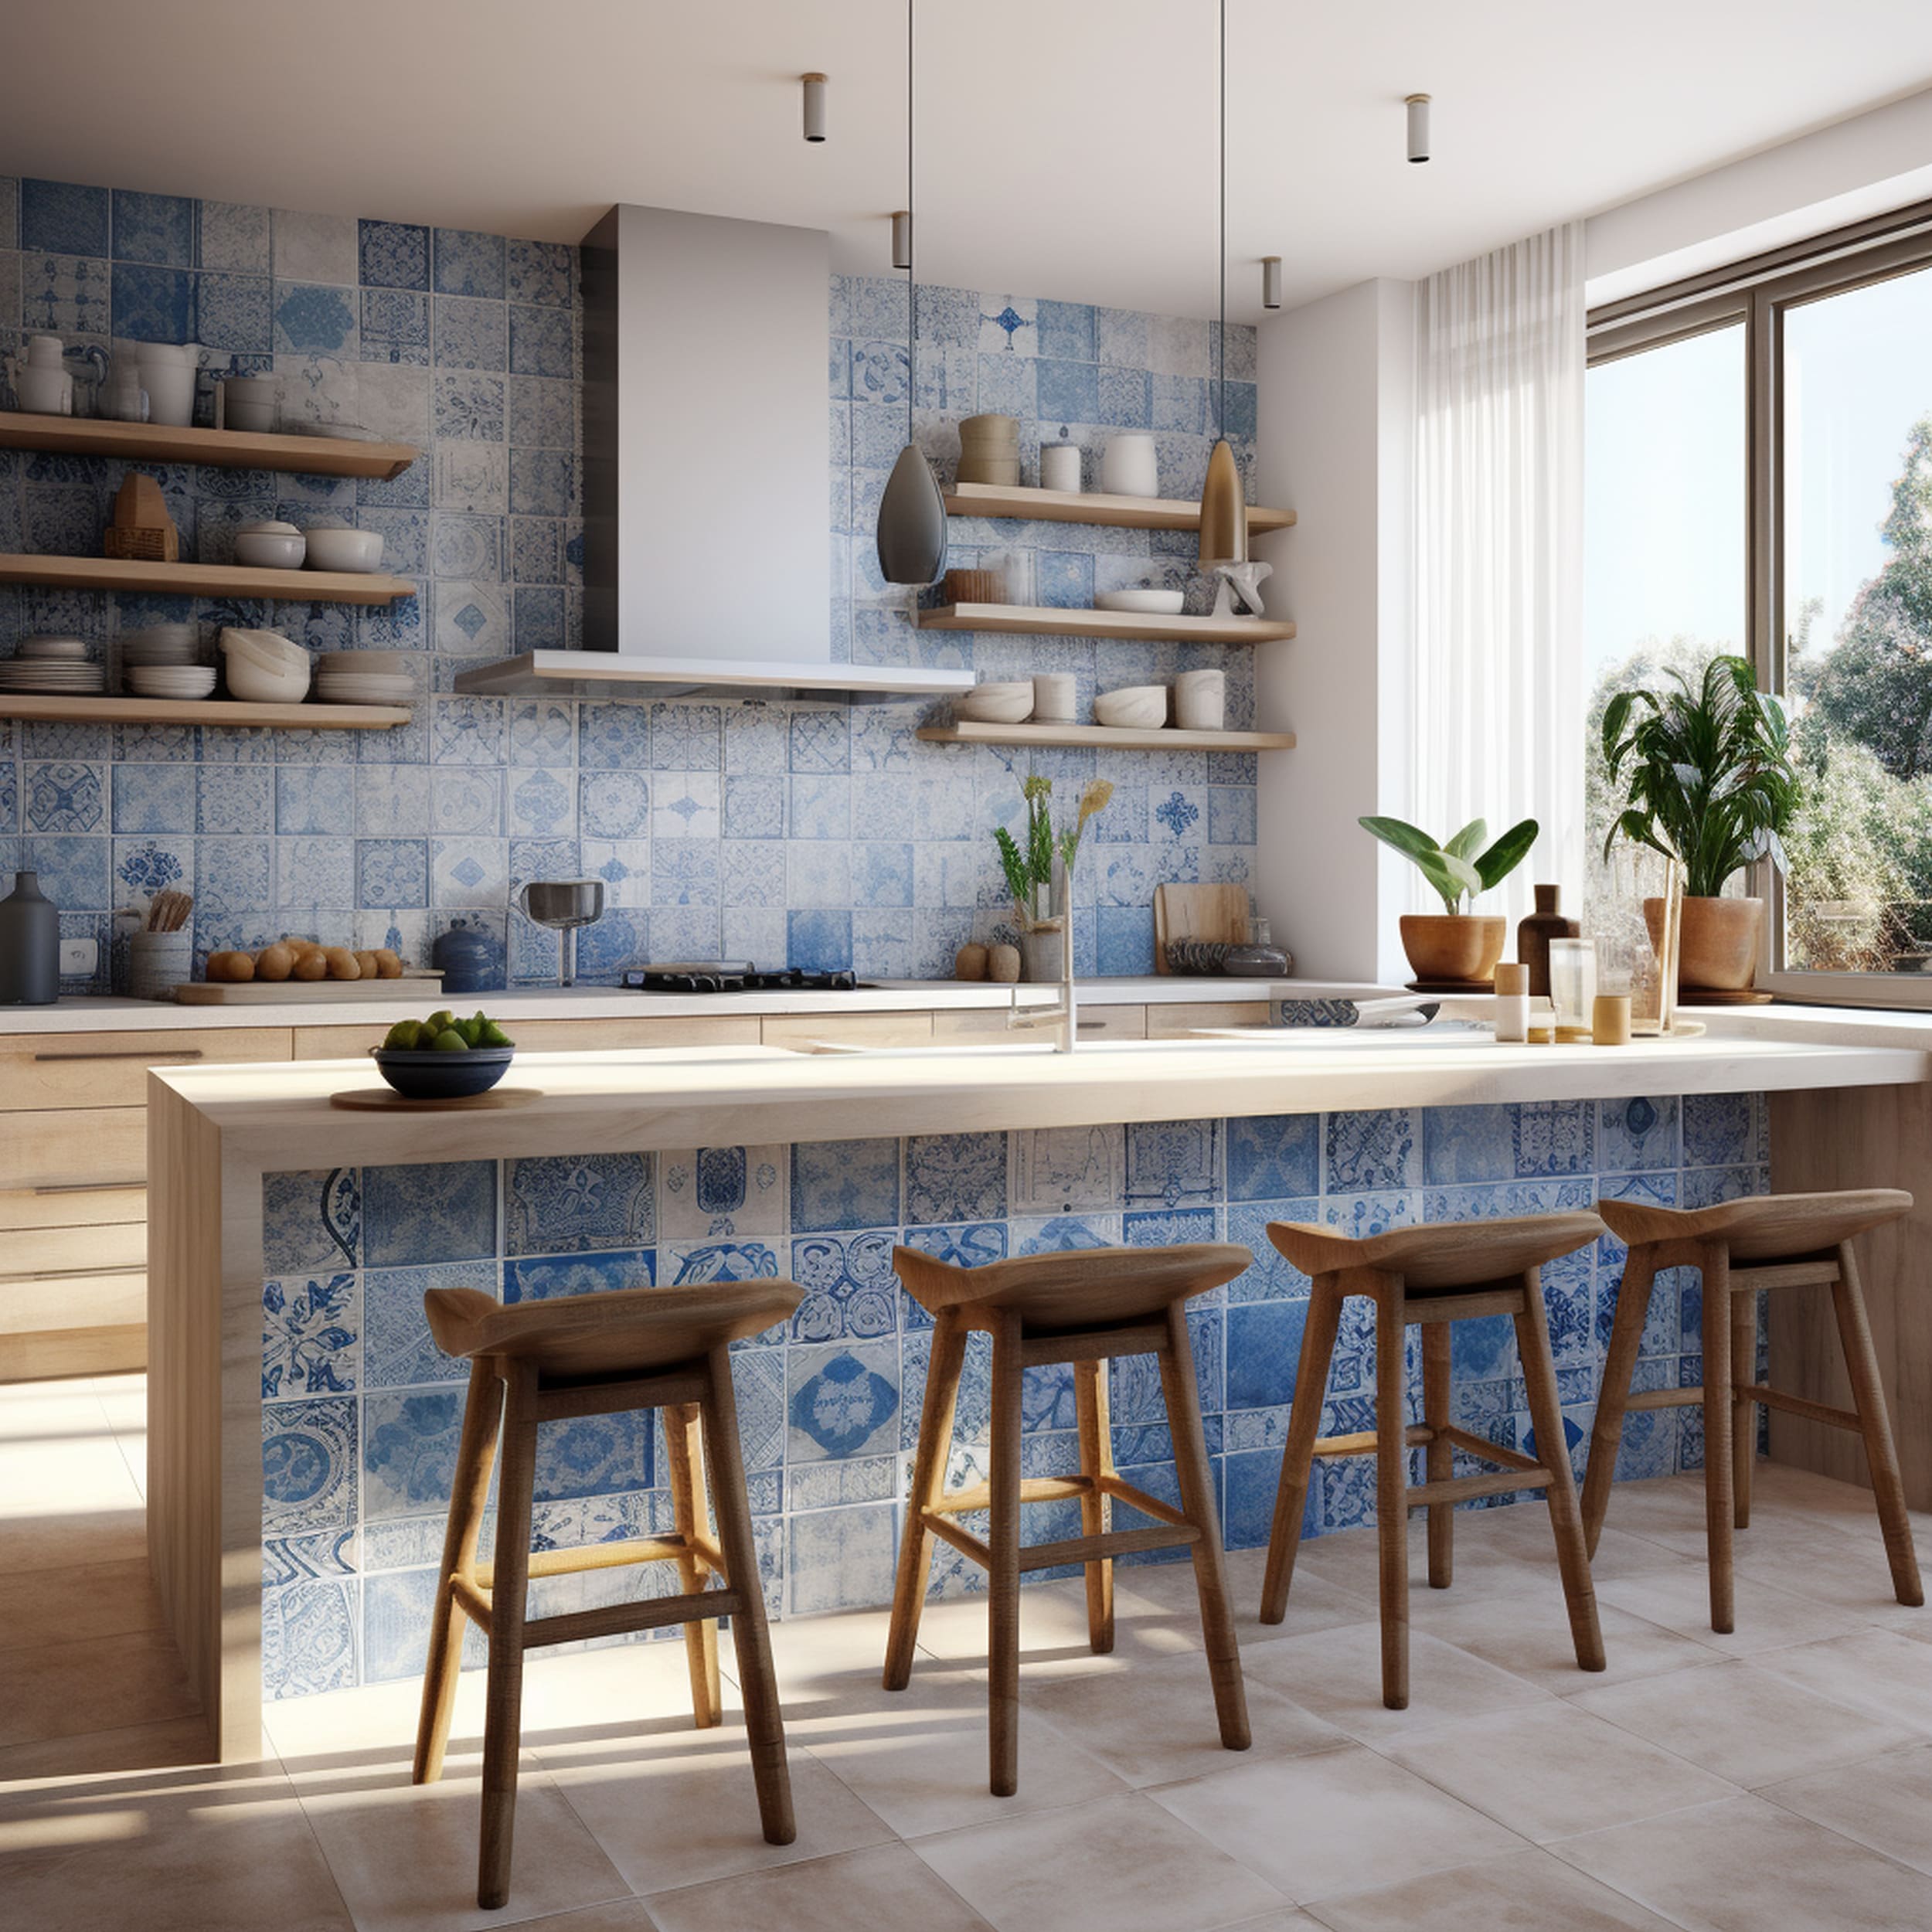 A Modern Kitchen With Light Blue Spanish Tiles on Backsplash and Kitchen Island